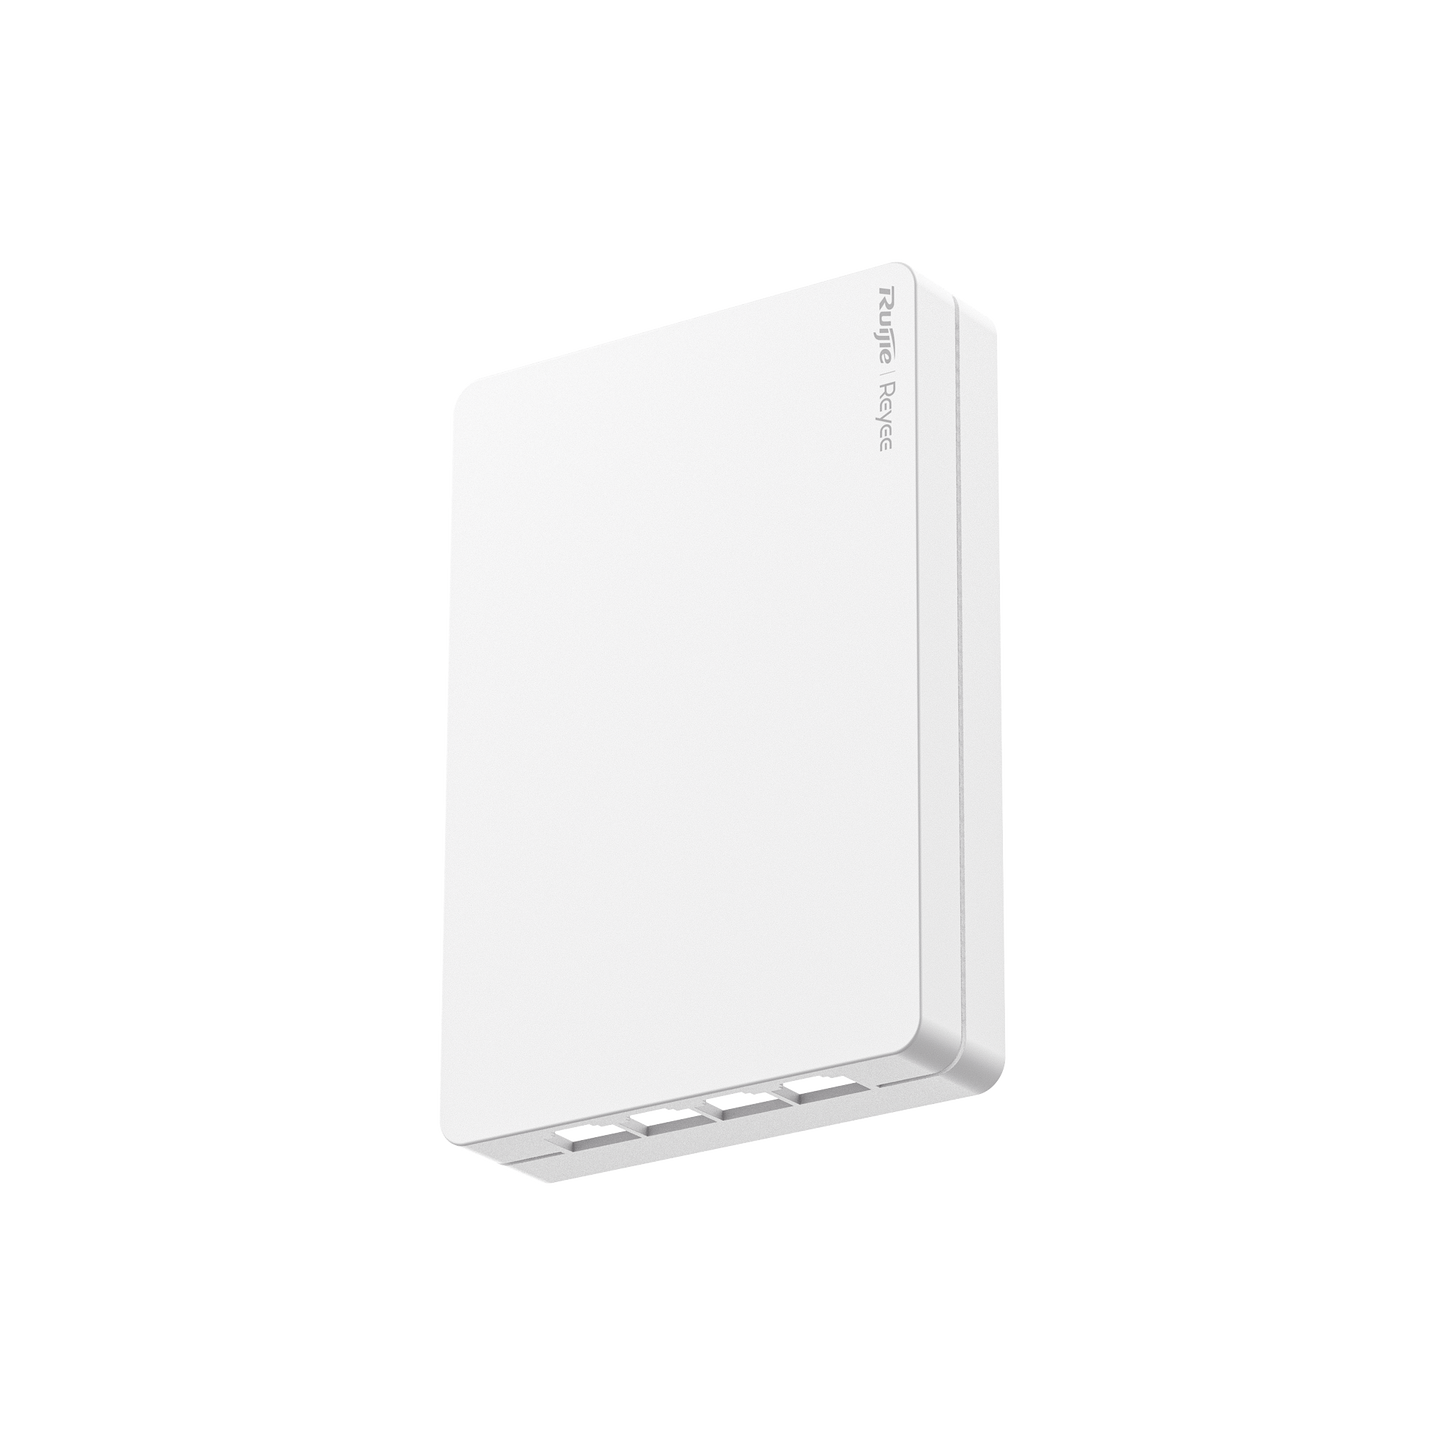 RG-RAP1260, Reyee Wi-Fi 6 AX3000 Dual-Band Wall Plate Access Point